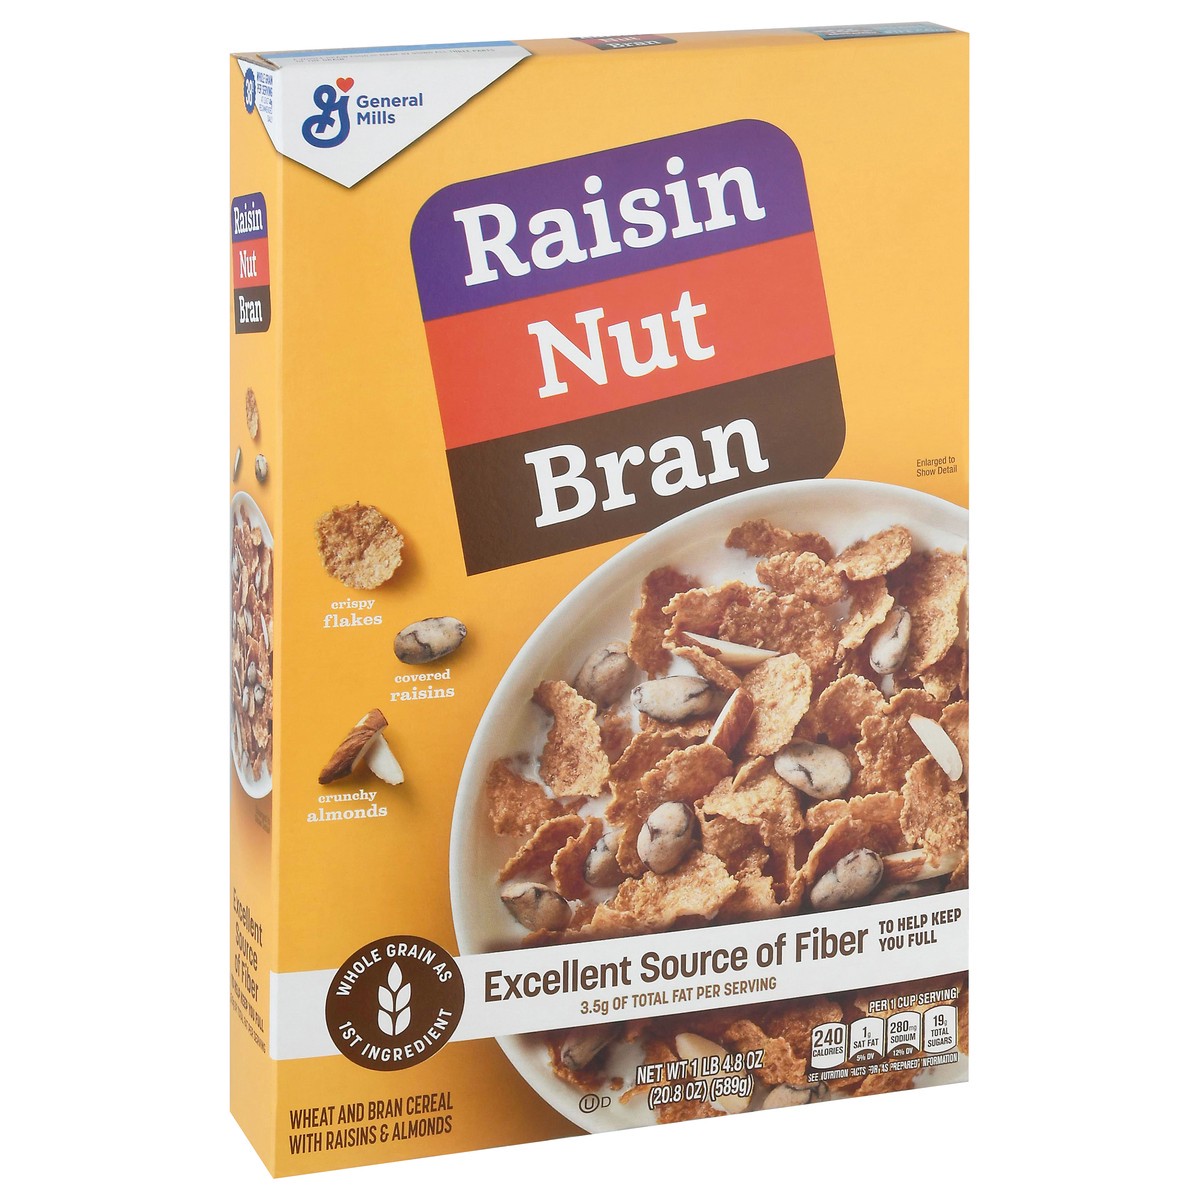 slide 11 of 11, 	
Raisin Nut Bran Breakfast Cereal, Coated Raisins, Almonds, Excellent Source Fiber, 20.8 oz, 17.1 oz